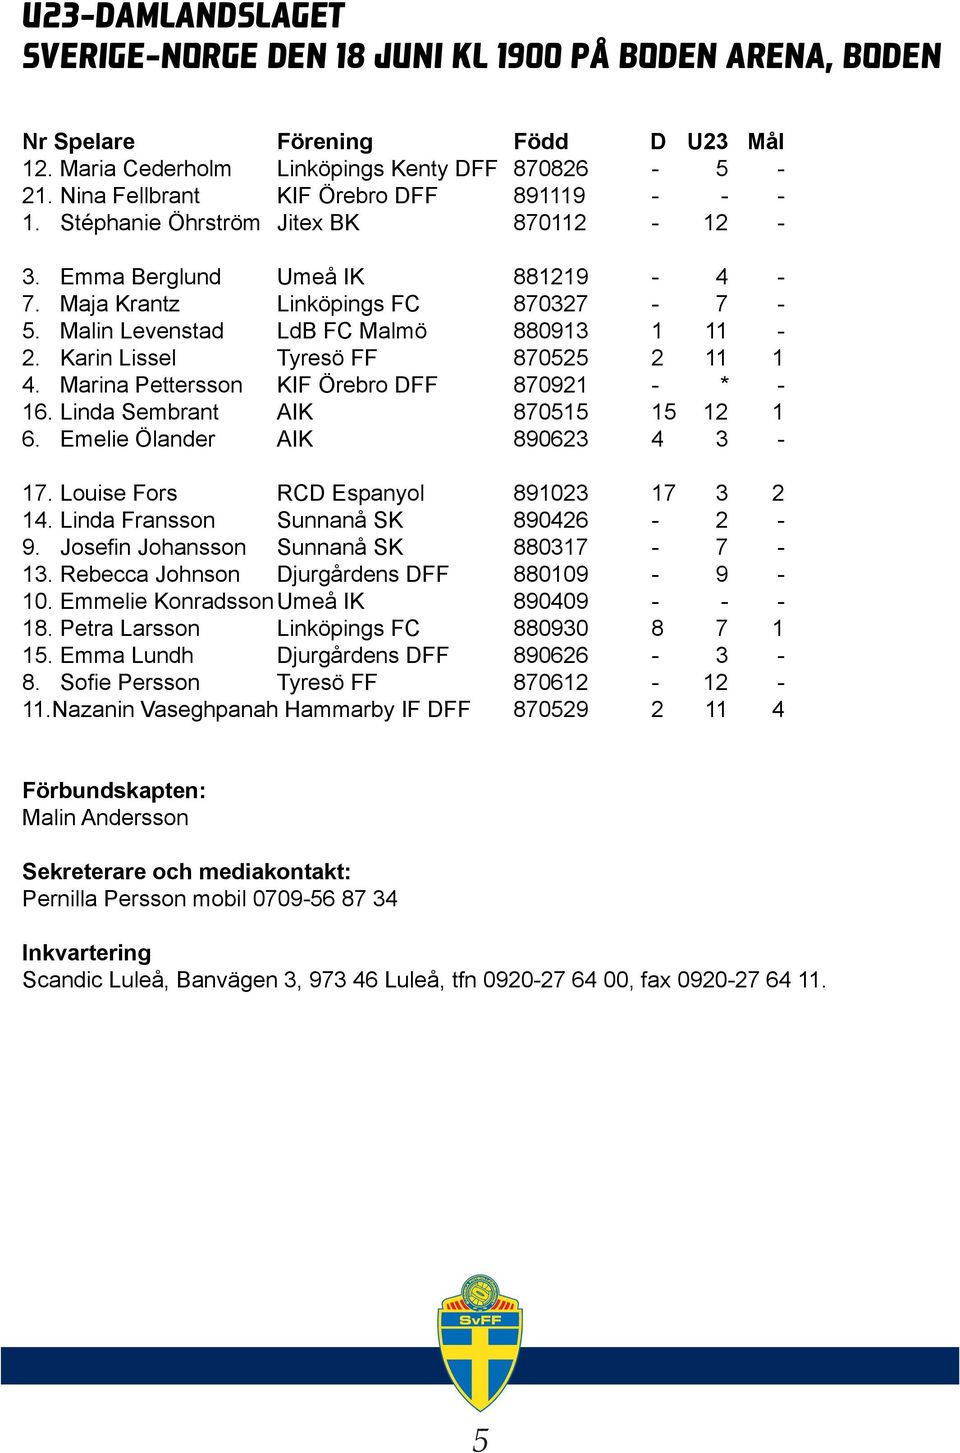 Malin Levenstad LdB FC Malmö 880913 1 11-2. Karin Lissel Tyresö FF 870525 2 11 1 4. Marina Pettersson KIF Örebro DFF 870921 - * - 16. Linda Sembrant AIK 870515 15 12 1 6.